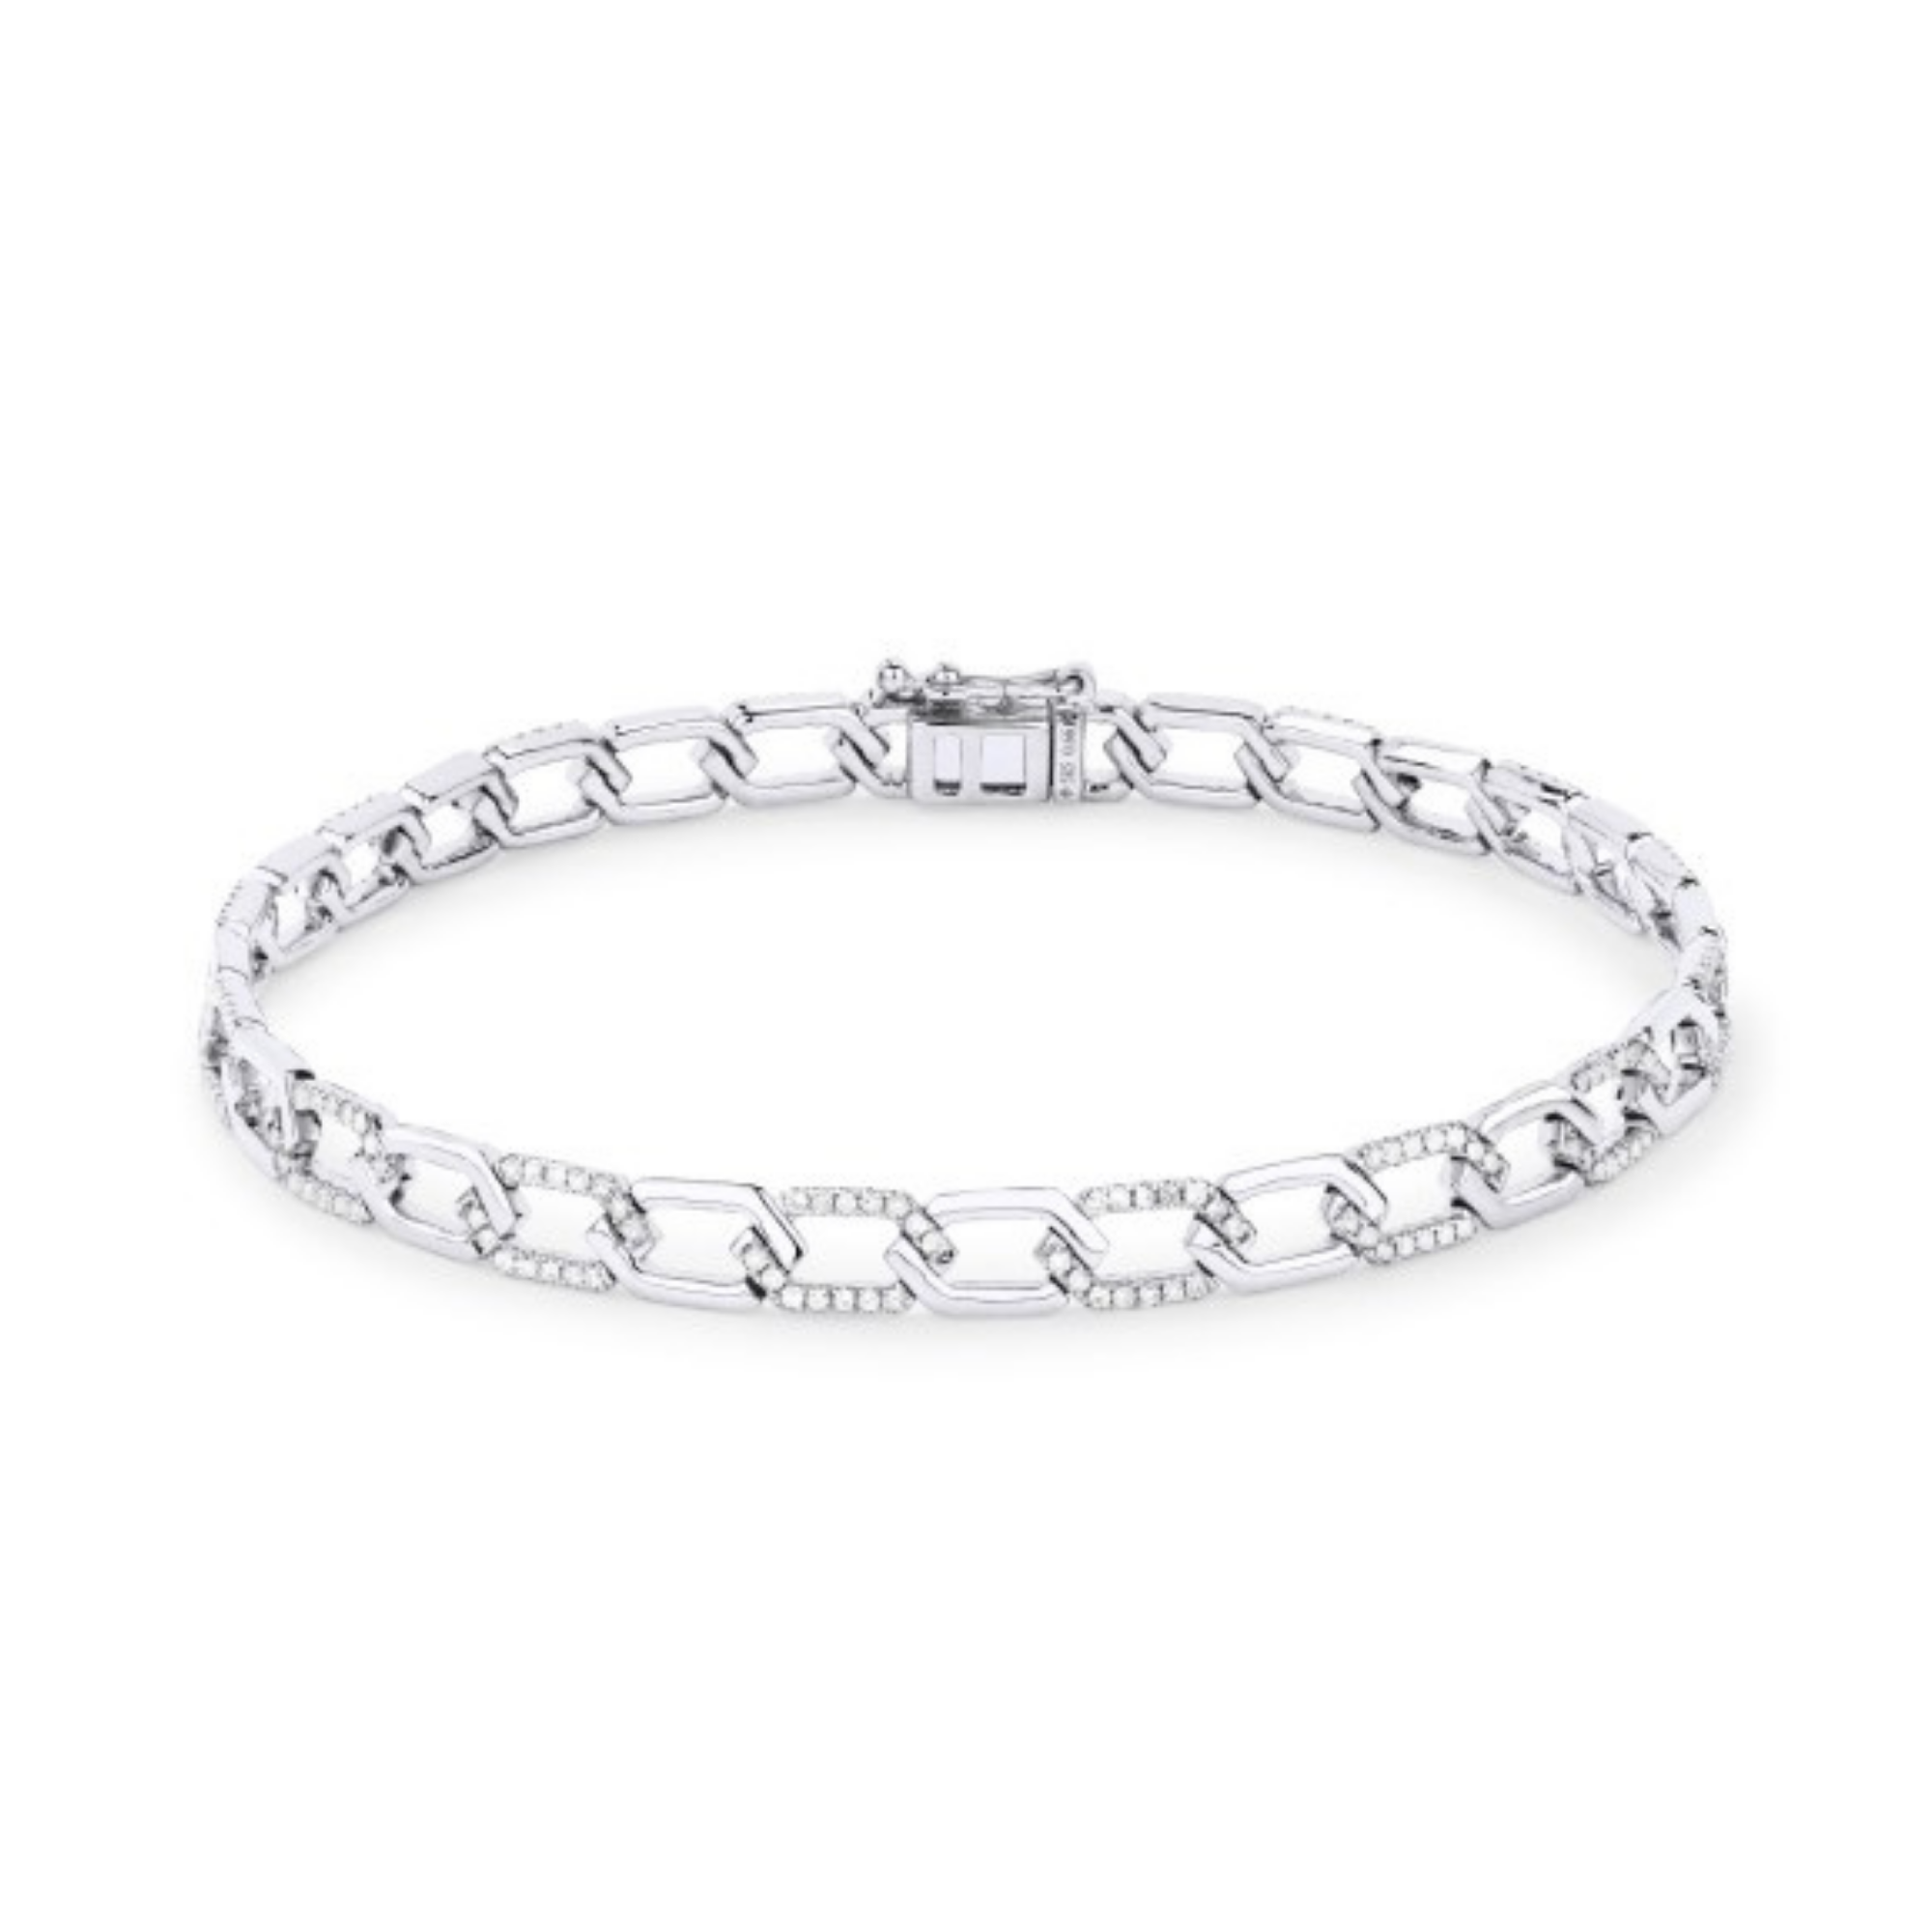 13 Secrets 14kt white gold and diamond link bracelet, $4,400 at 13 Secrets Jewelry Gallery 